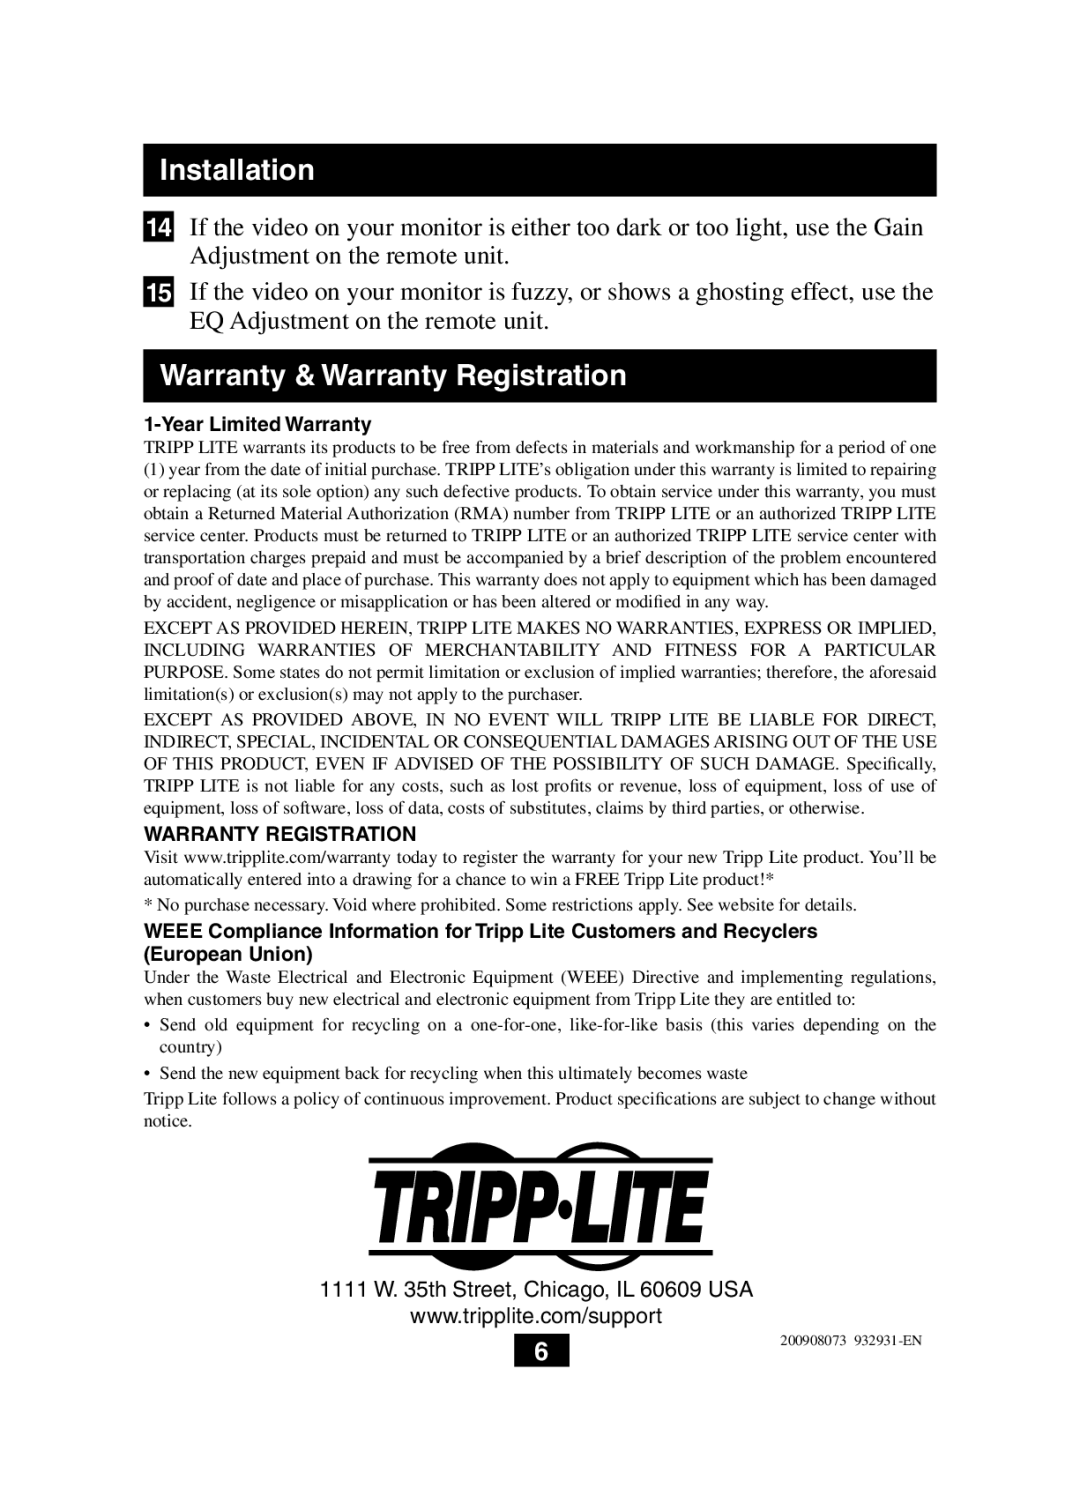 Tripp Lite B130-101S-WP 1111 W. 35th Street, Chicago, IL 60609 USA, Year Limited Warranty, Warranty Registration 